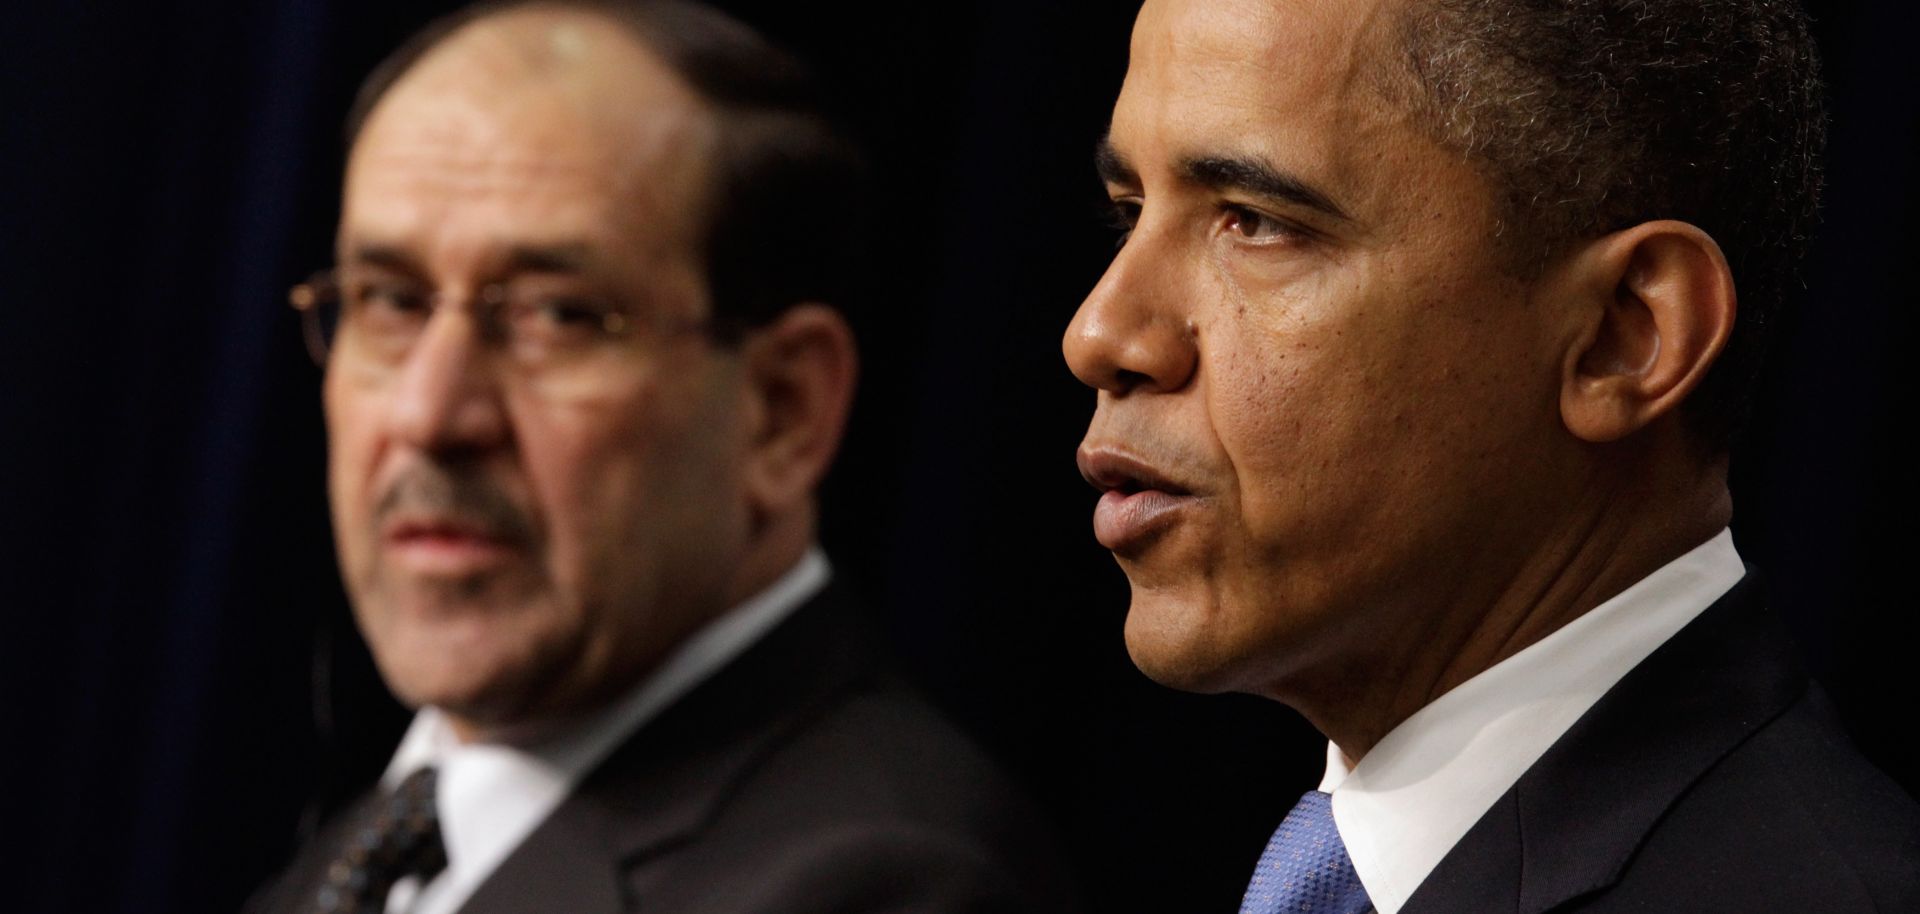  Iraqi Prime Minister Nouri Al-Maliki and U.S. President Barack Obama.